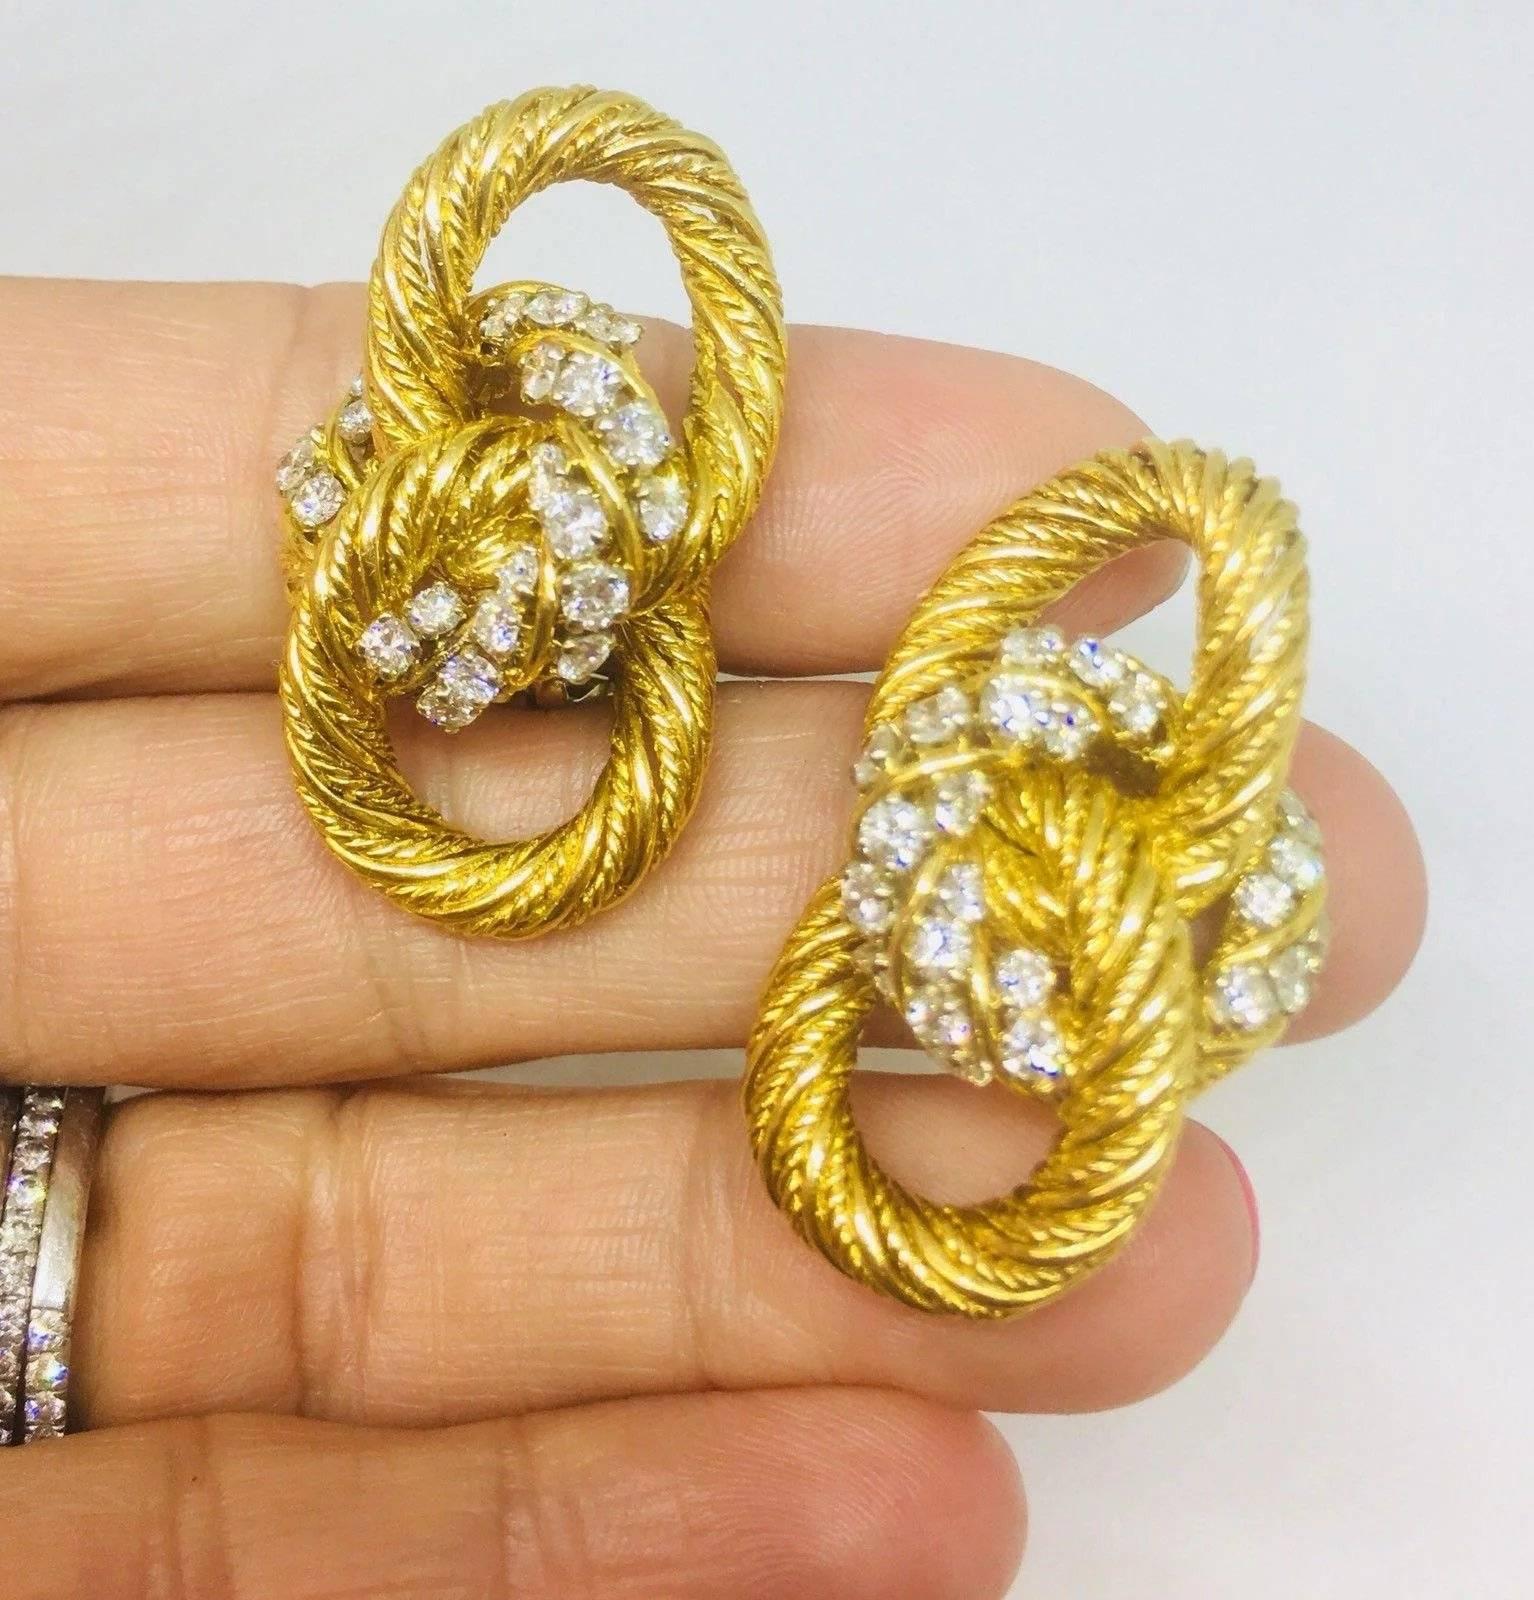 Impressive George Schuler designer for Tiffany & Co. Heavy 18K Gold (Yellow) Interlocking Rope 2.64 G/VS Diamond Earrings.

The earrings measure a size of 1.15